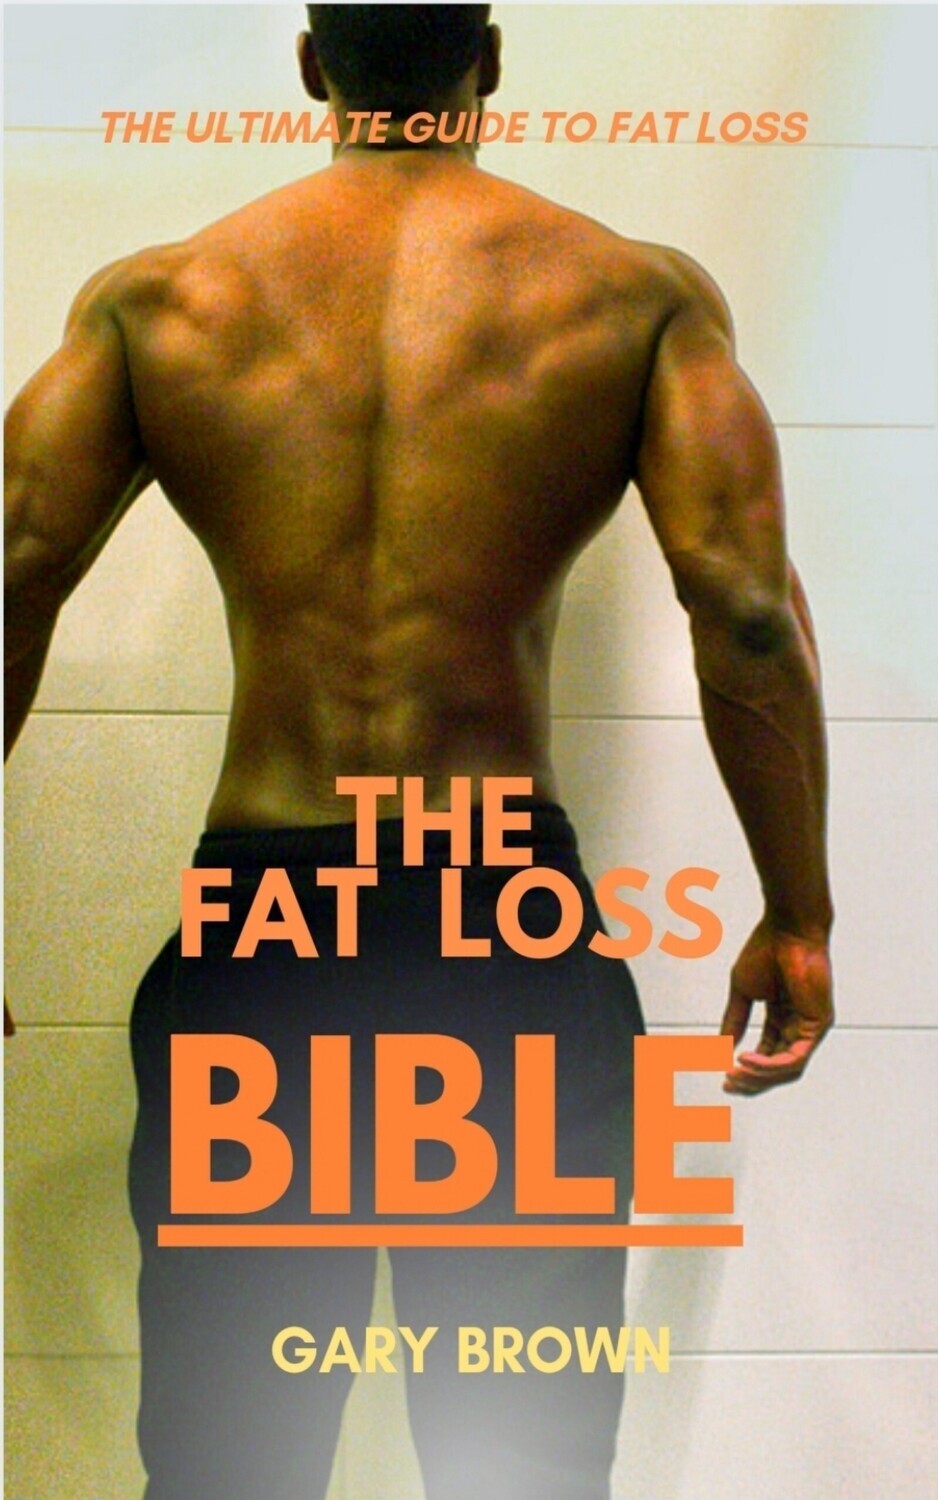 THE FAT LOSS BIBLE